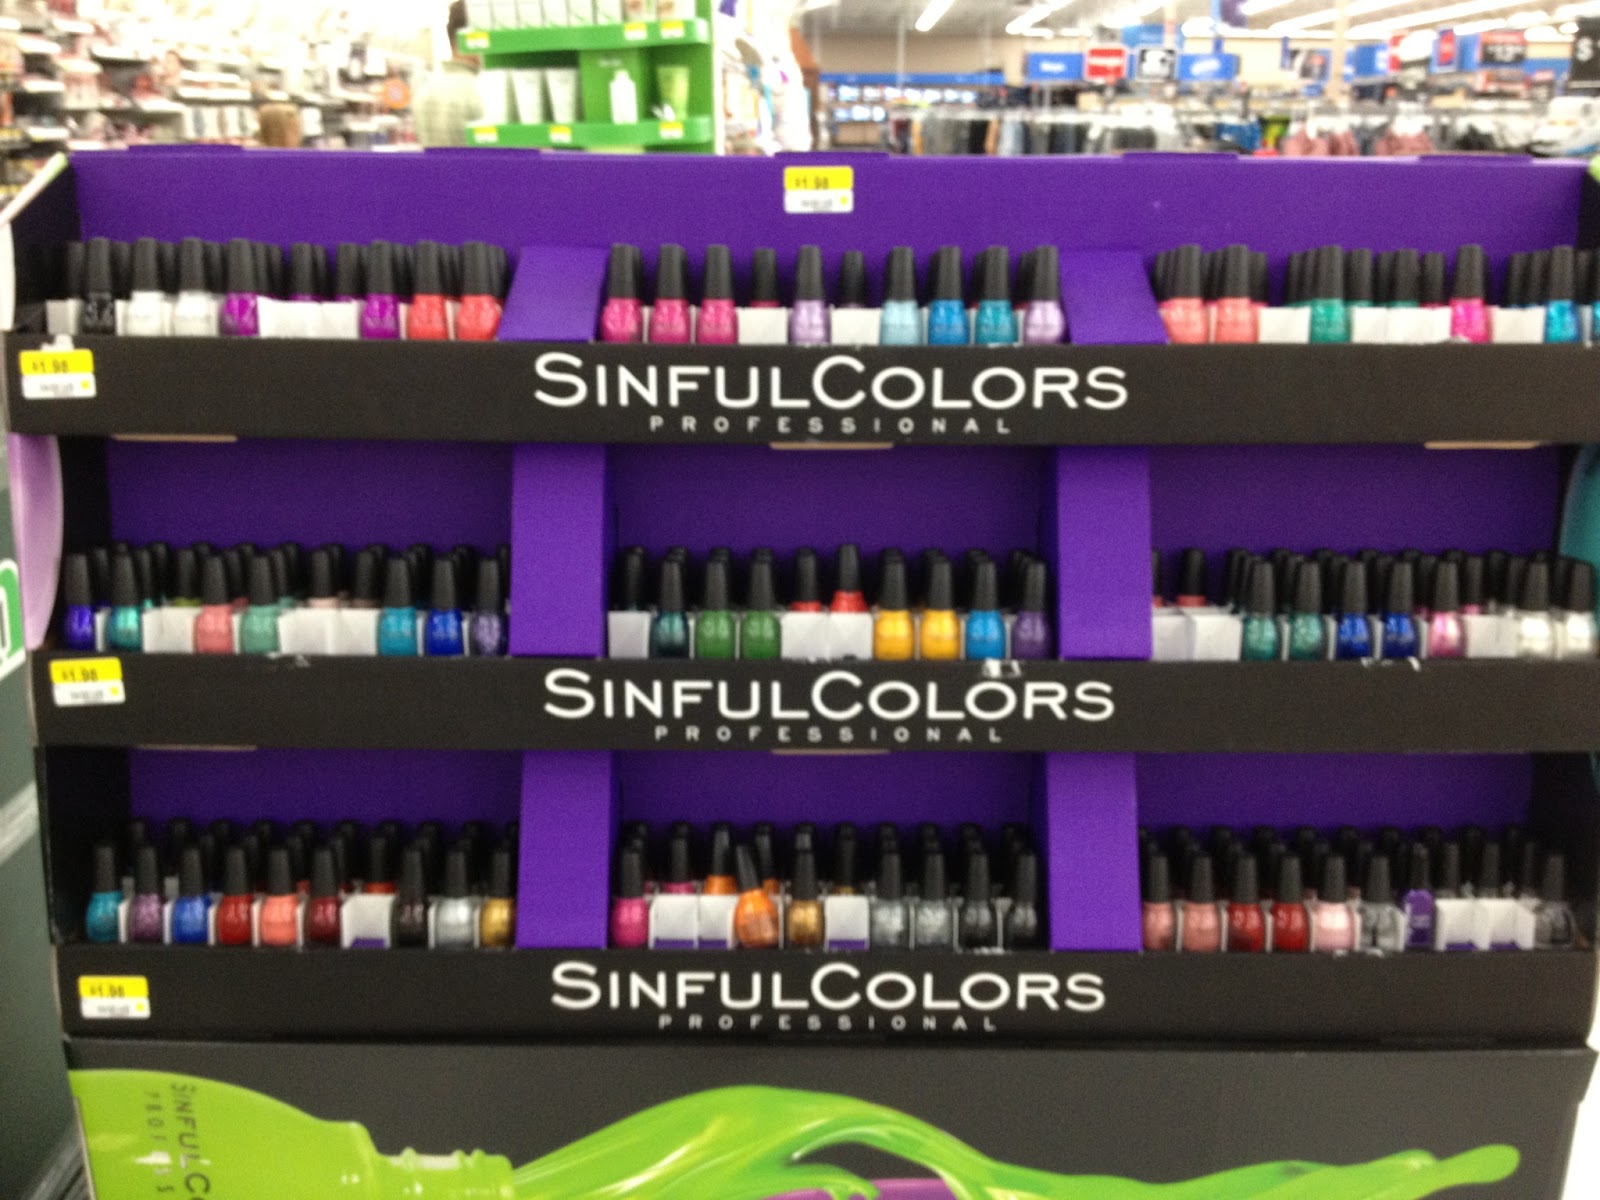 1. Sinful Colors Professional Nail Polish - Walmart.com - wide 1